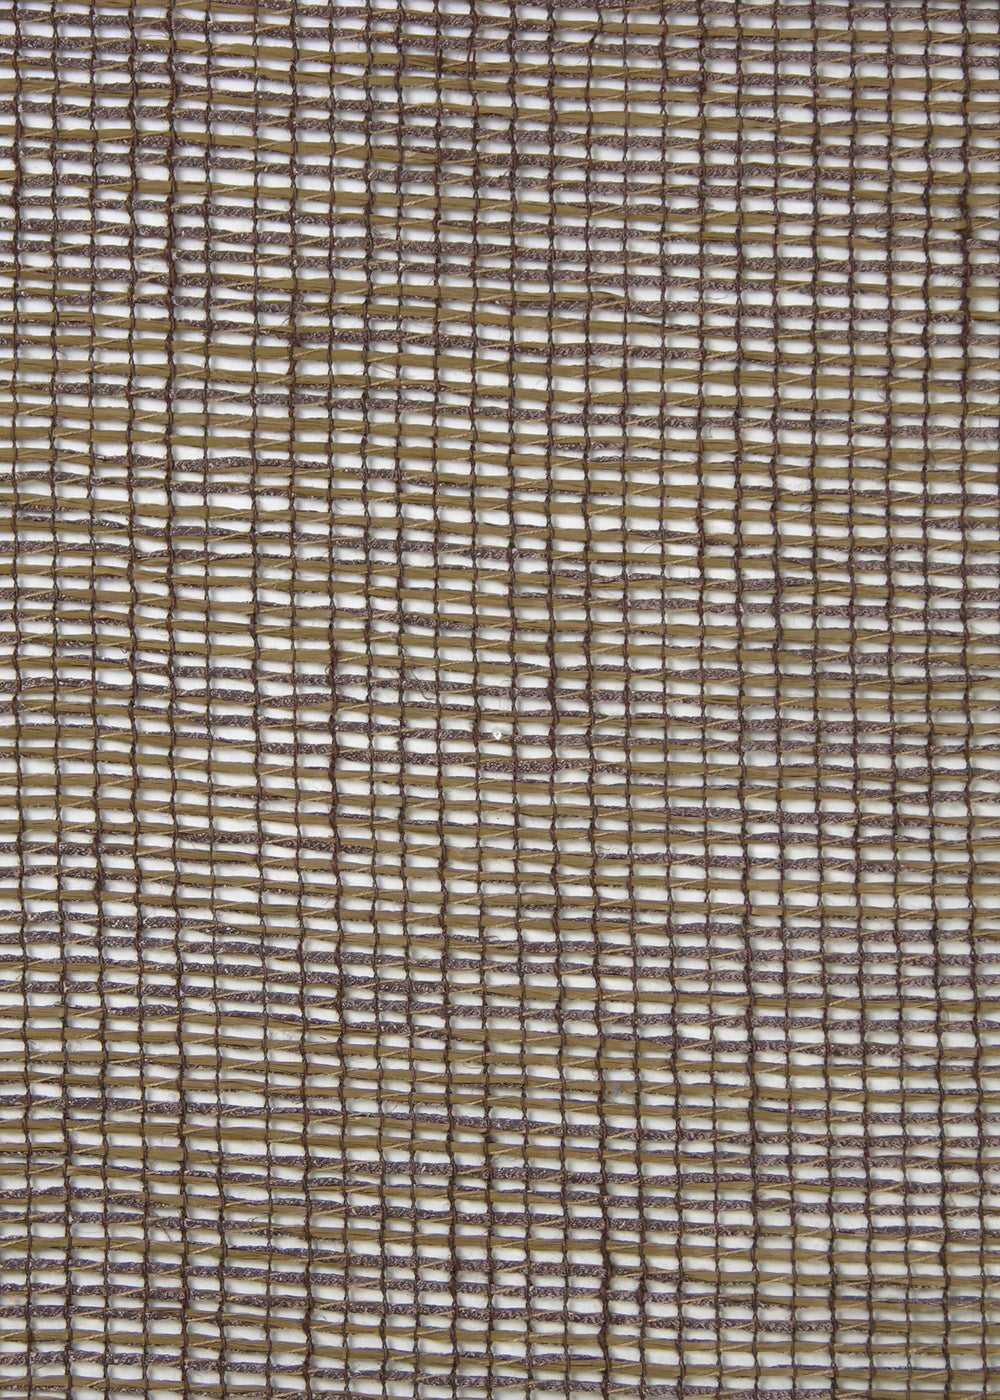 jute brown fabric with an open rectangular weave